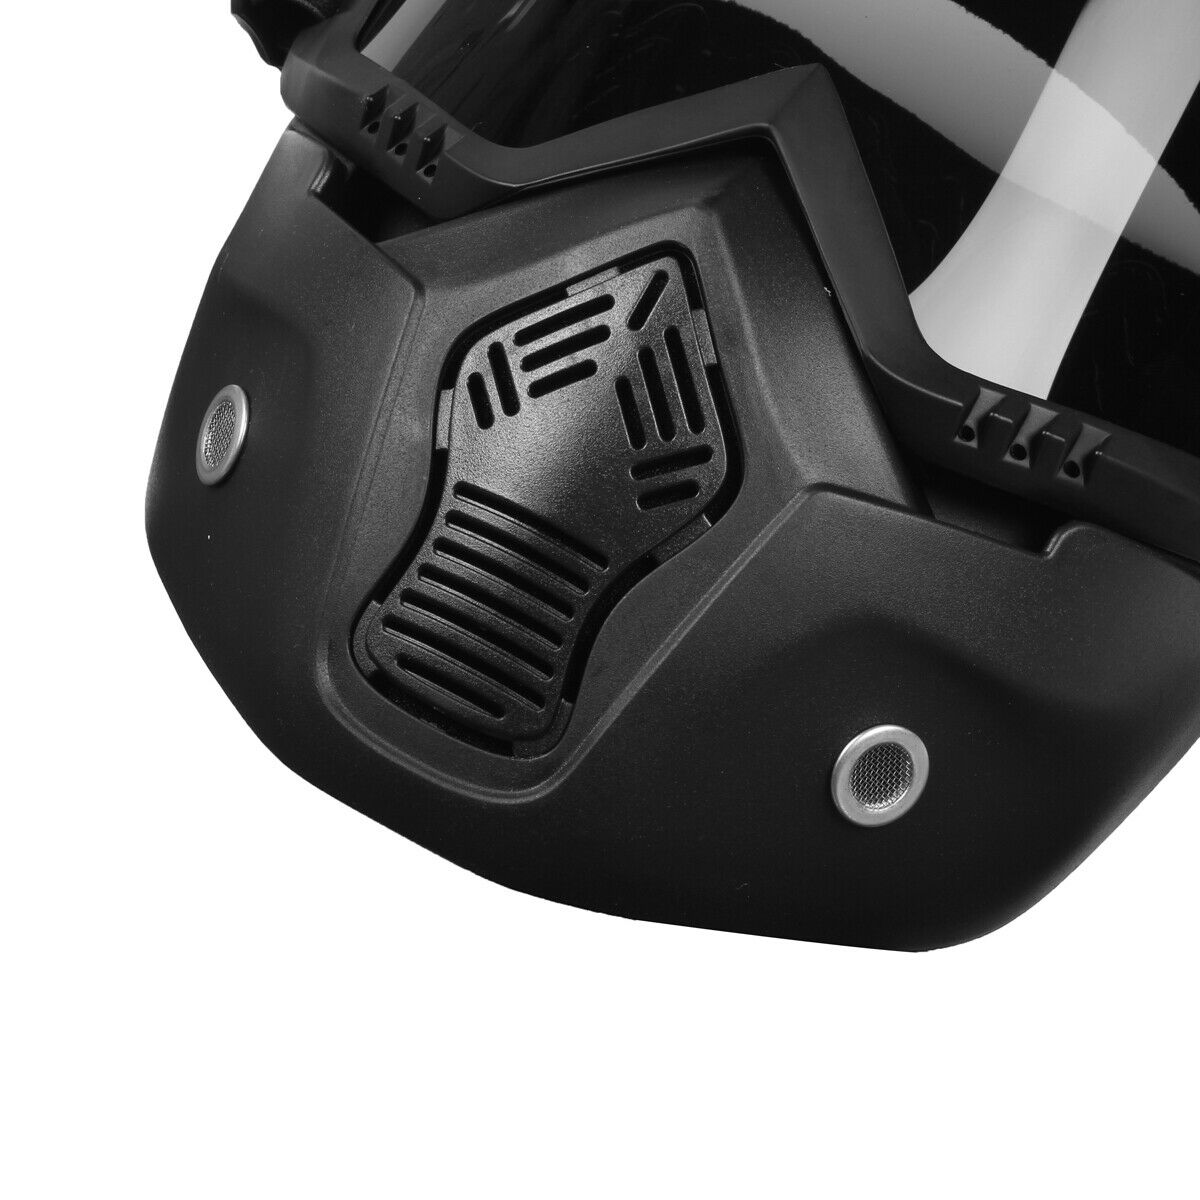 Modular Motorcycle Bike Riding Helmet Open Face Maskk Shield Goggles l+